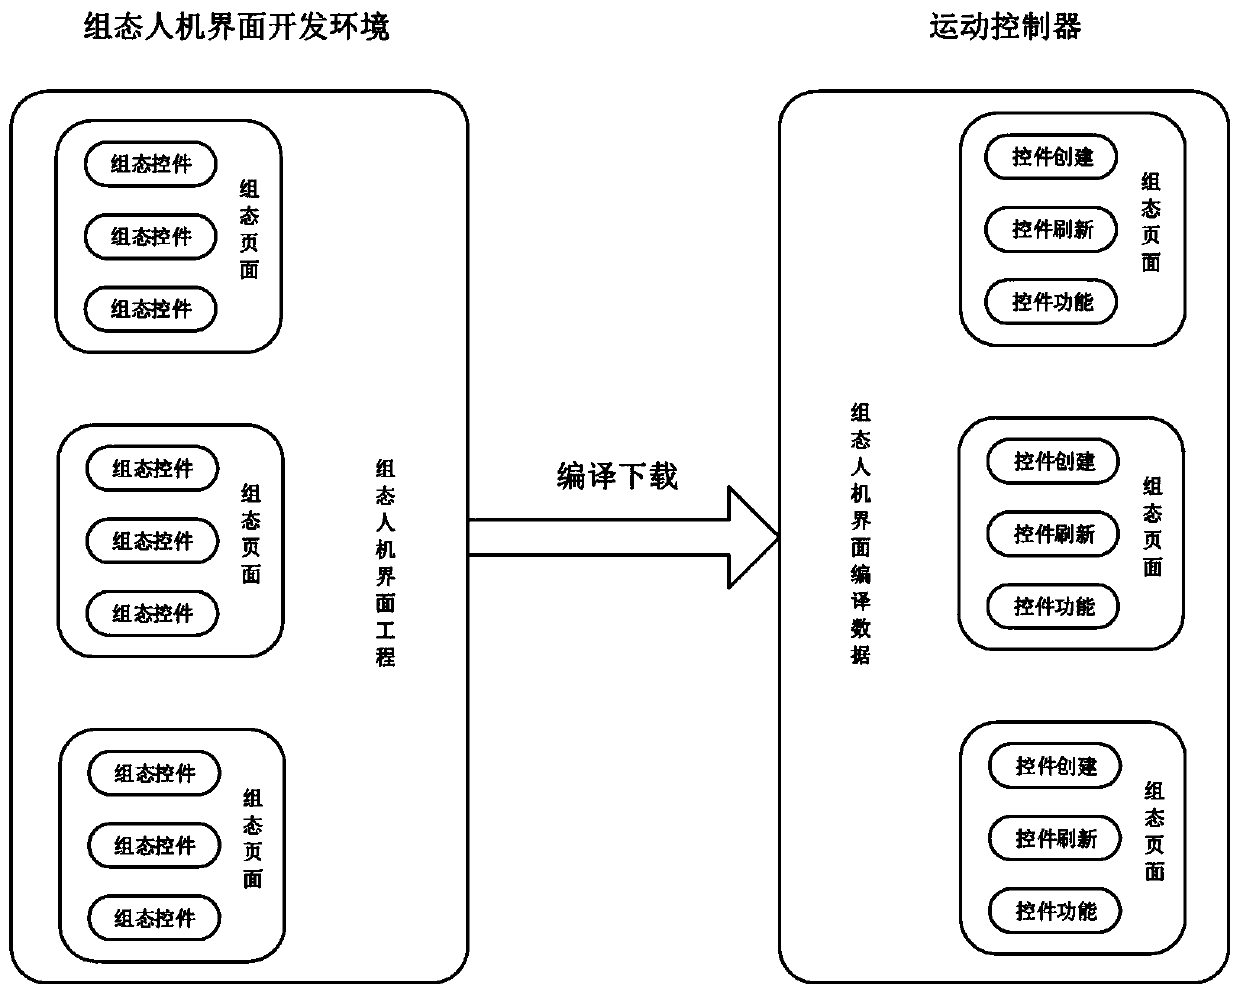 Human-computer interface configuration development method of motion controller